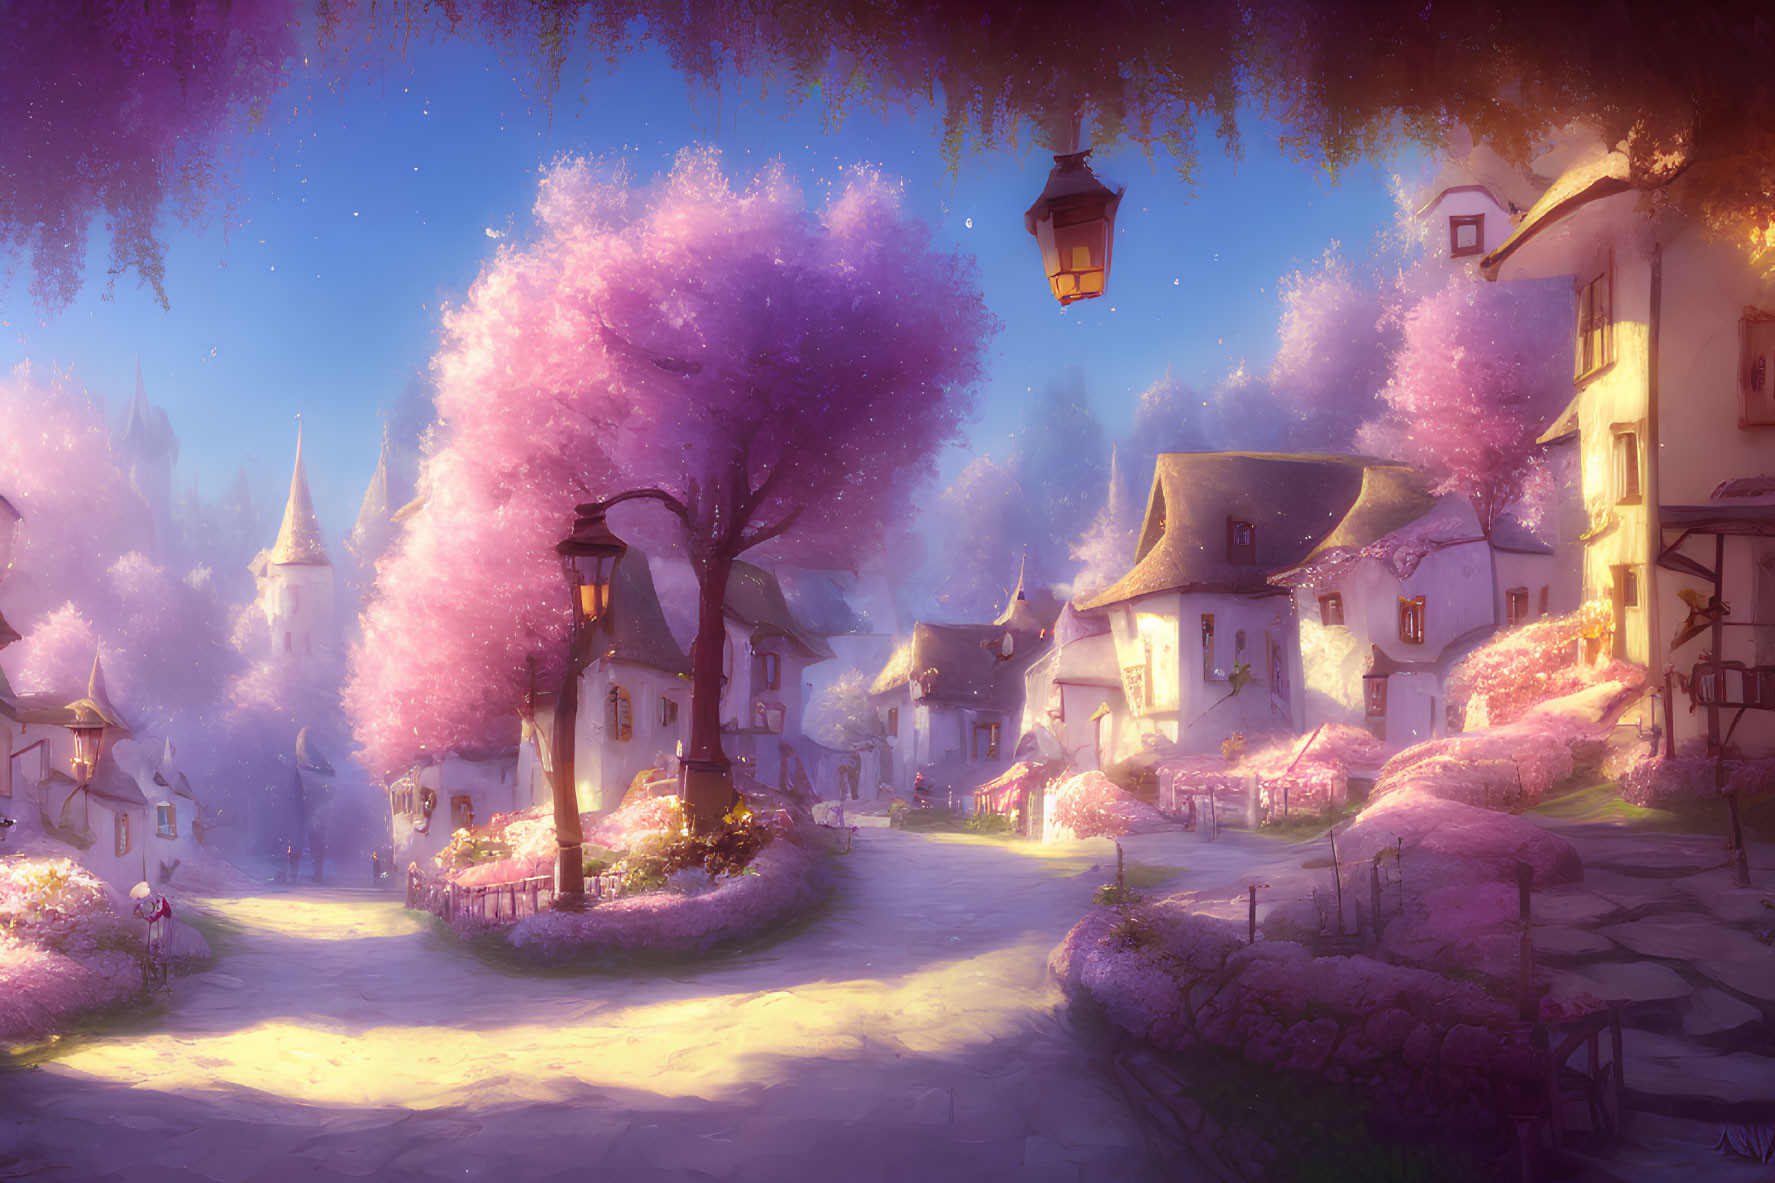 Enchanting village scene: pink trees, lantern-lit paths, castle silhouette